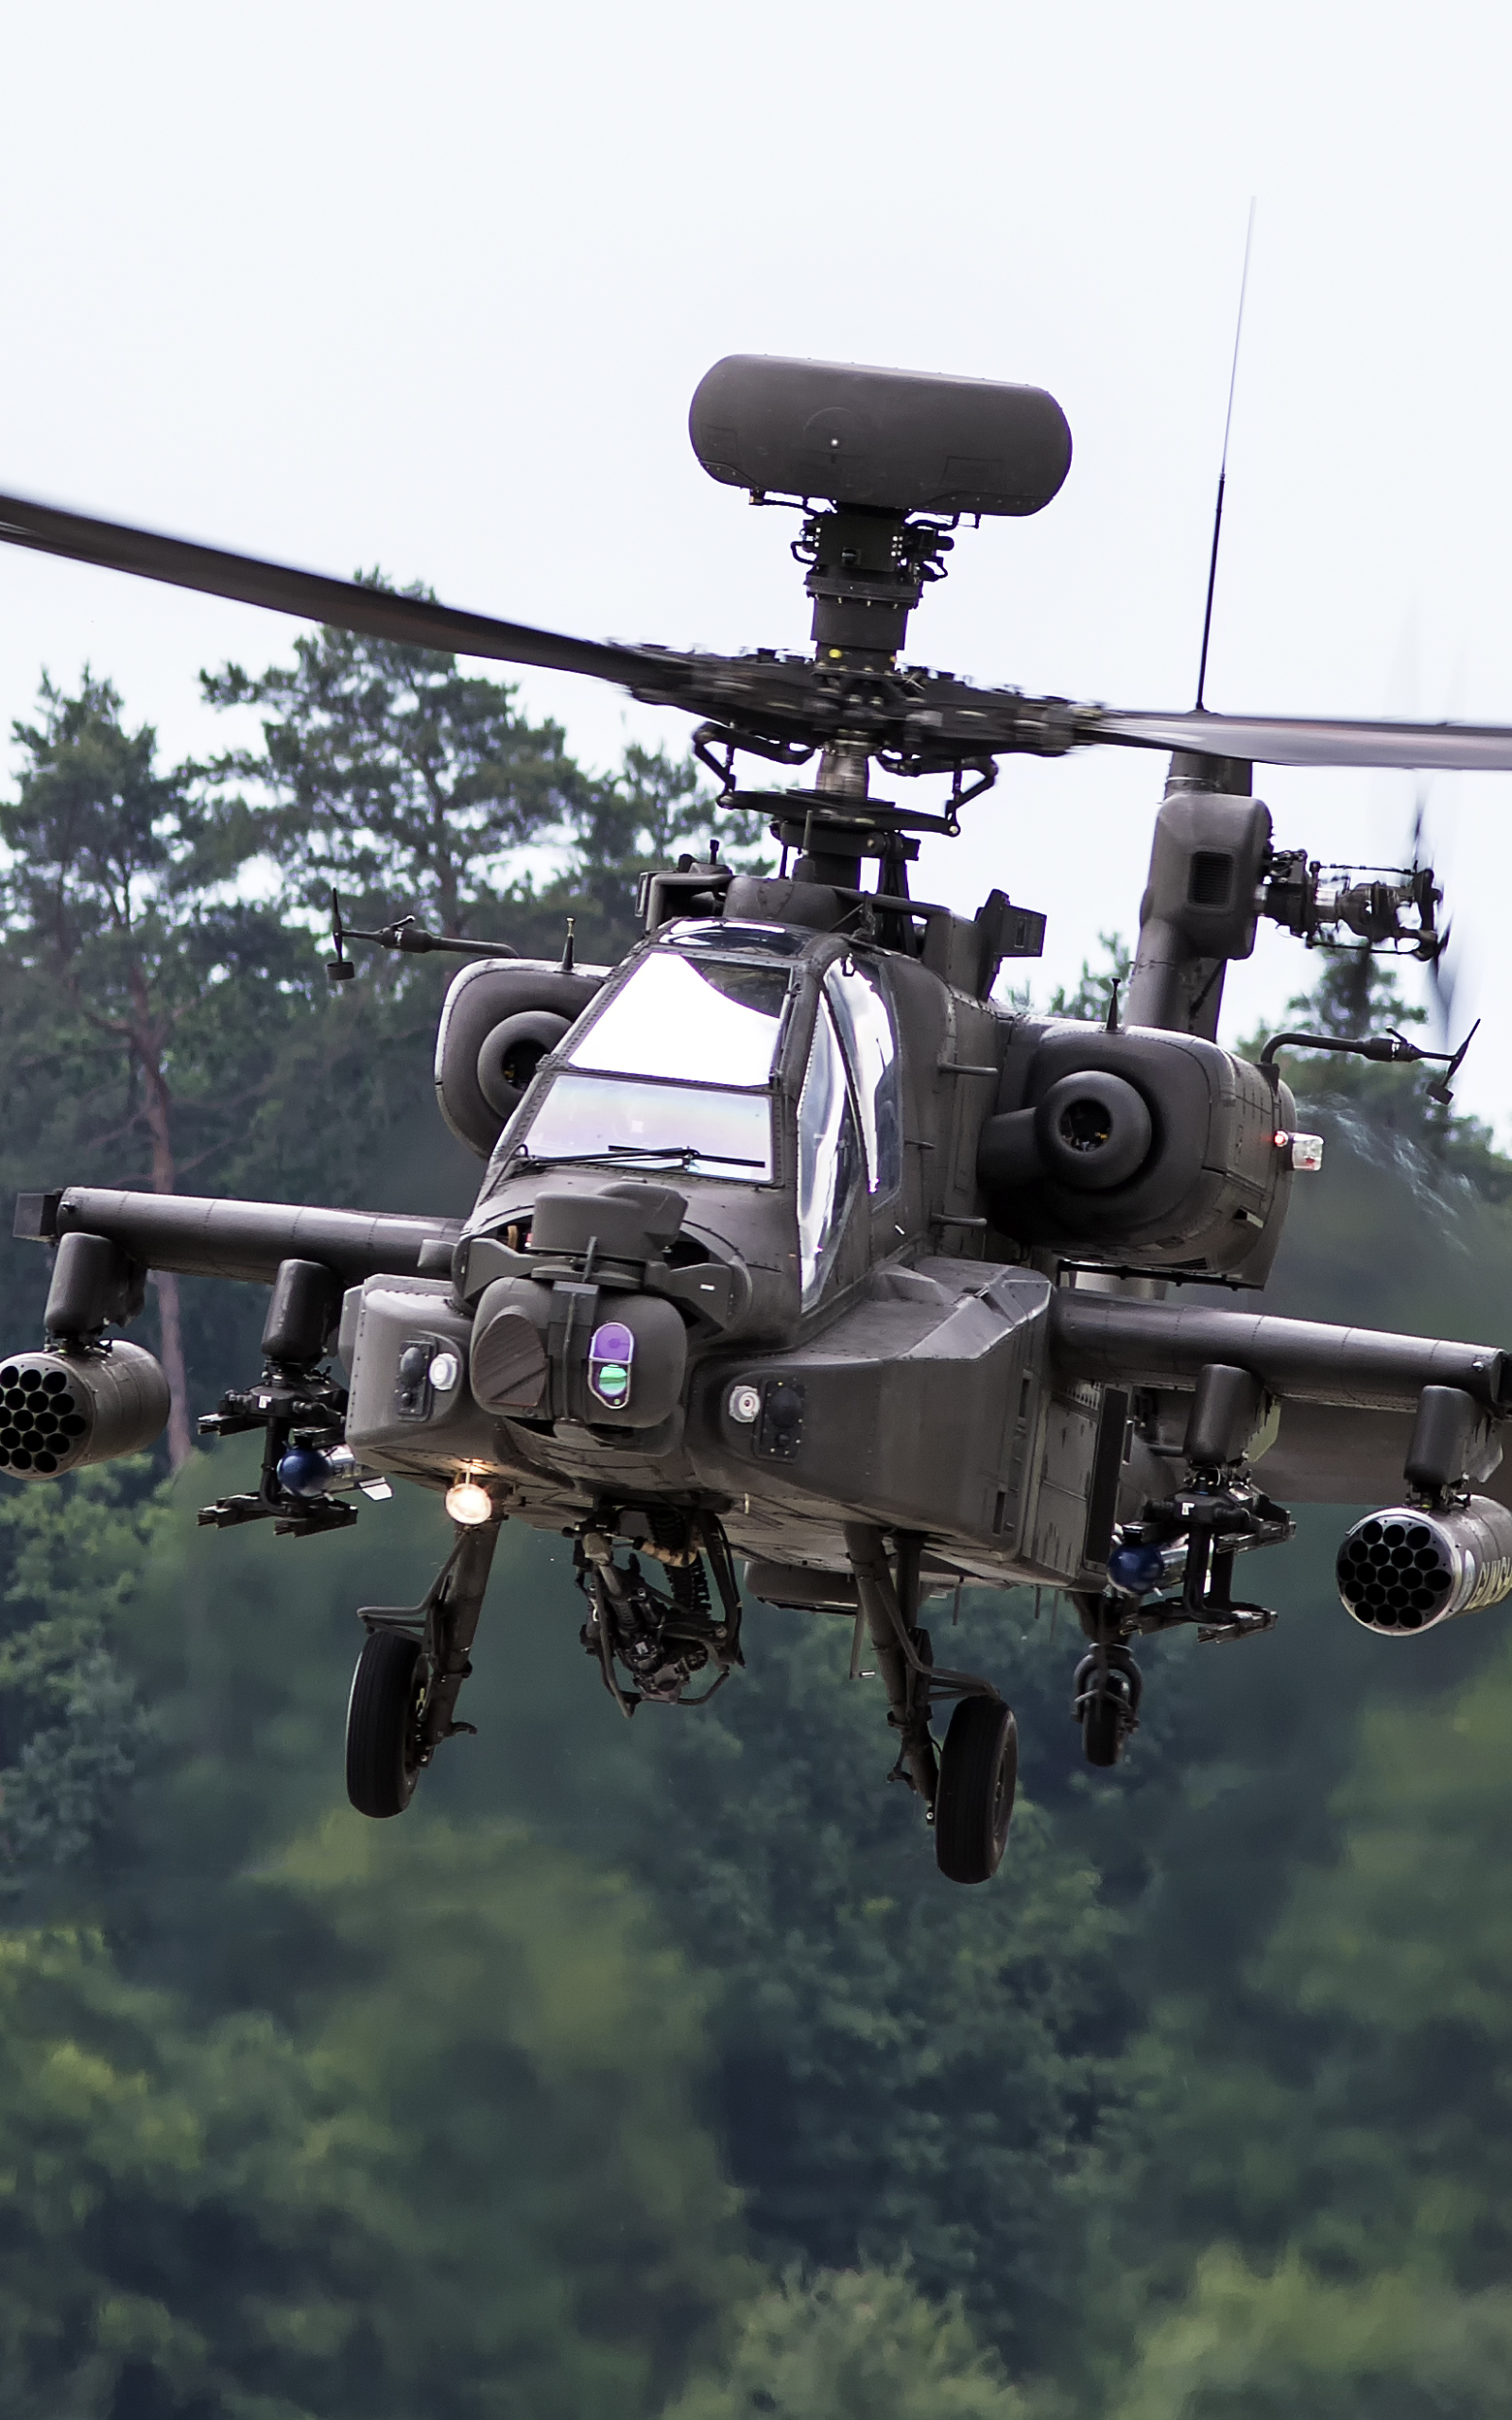 Baixe gratuitamente a imagem Helicóptero, Militar, Boeing Ah 64 Apache, Helicóptero De Ataque na área de trabalho do seu PC